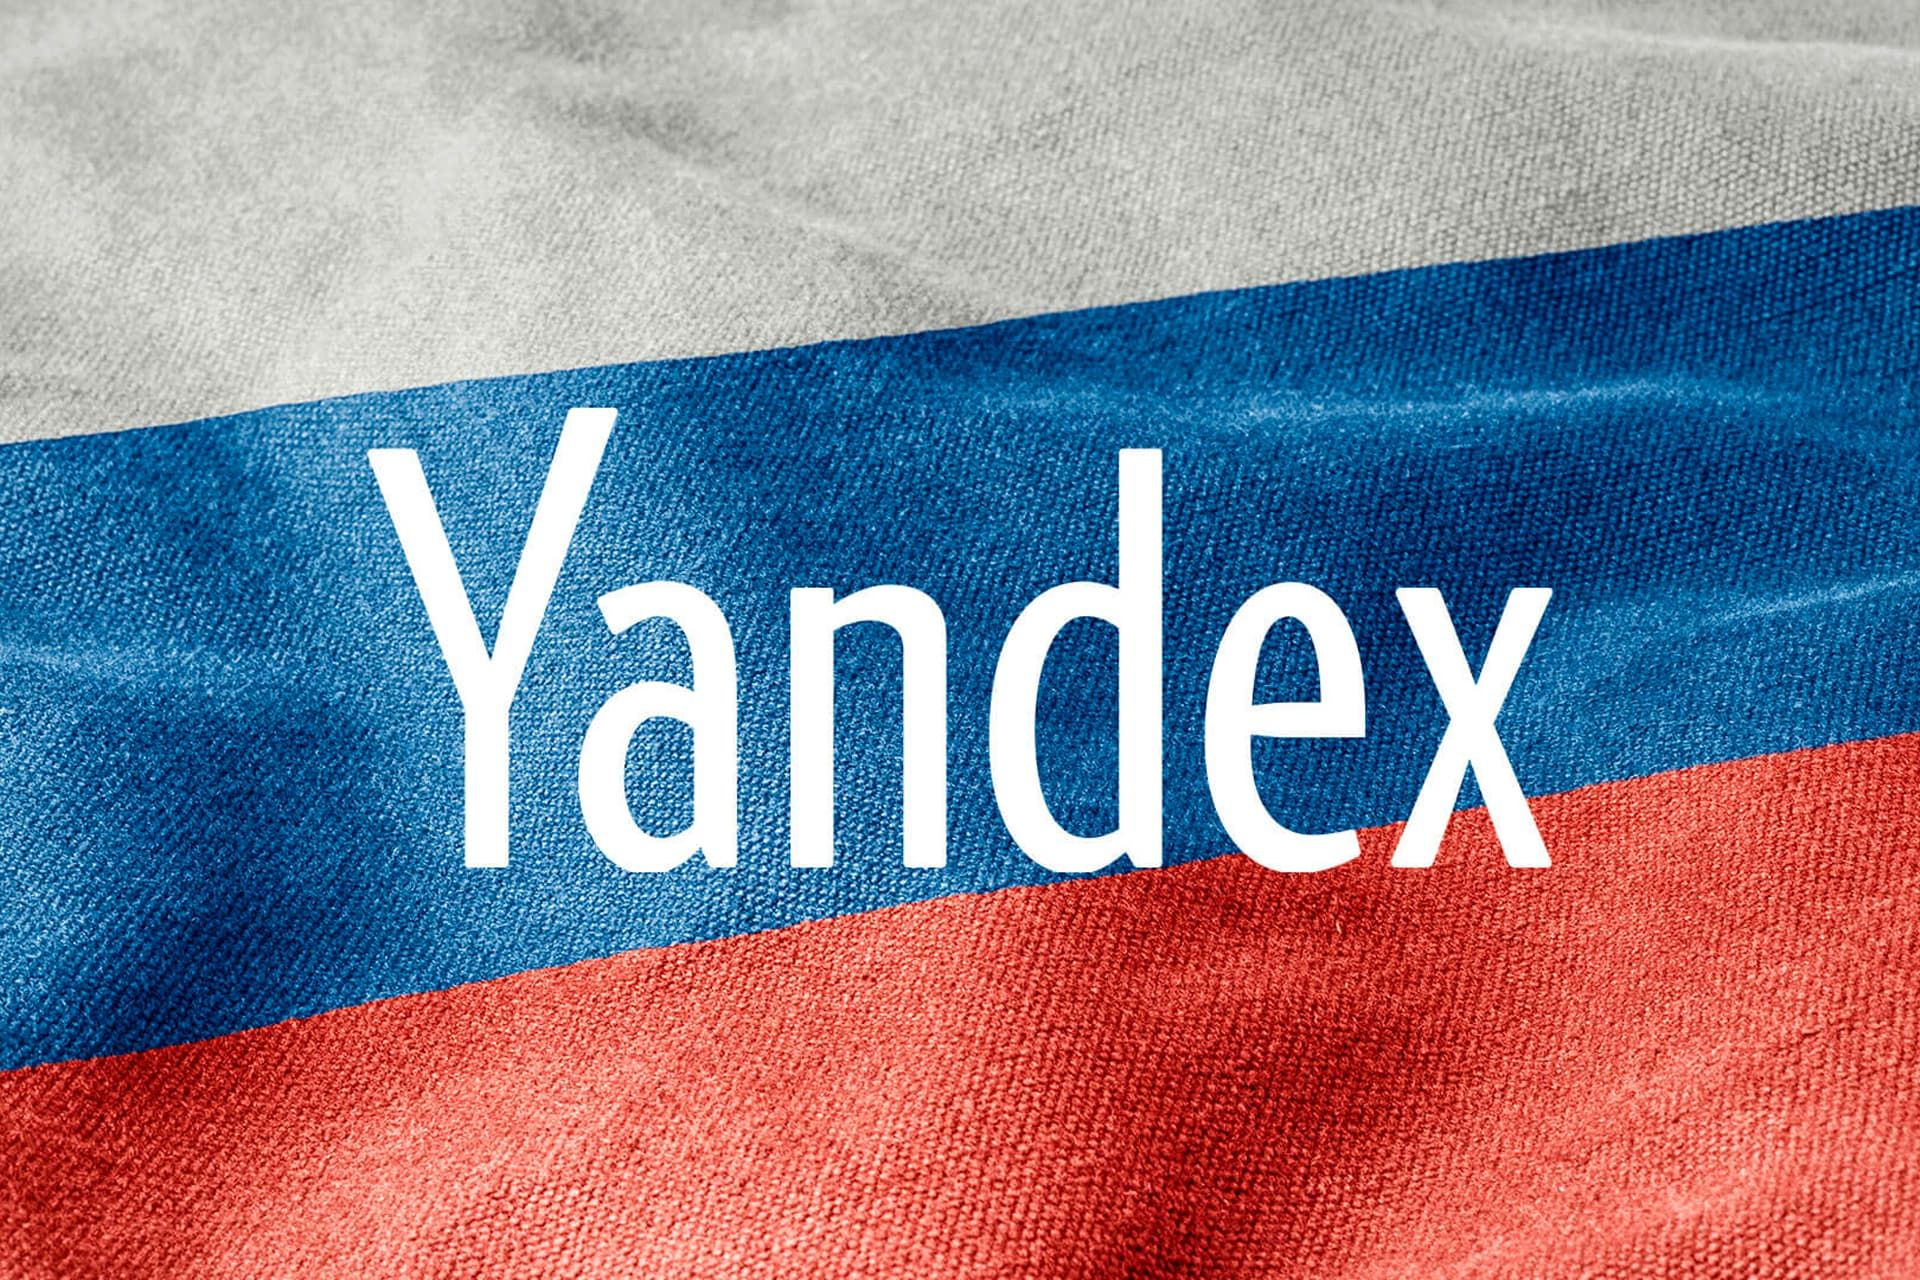 لوگو یاندکس Yandex روی پرچم روسیه